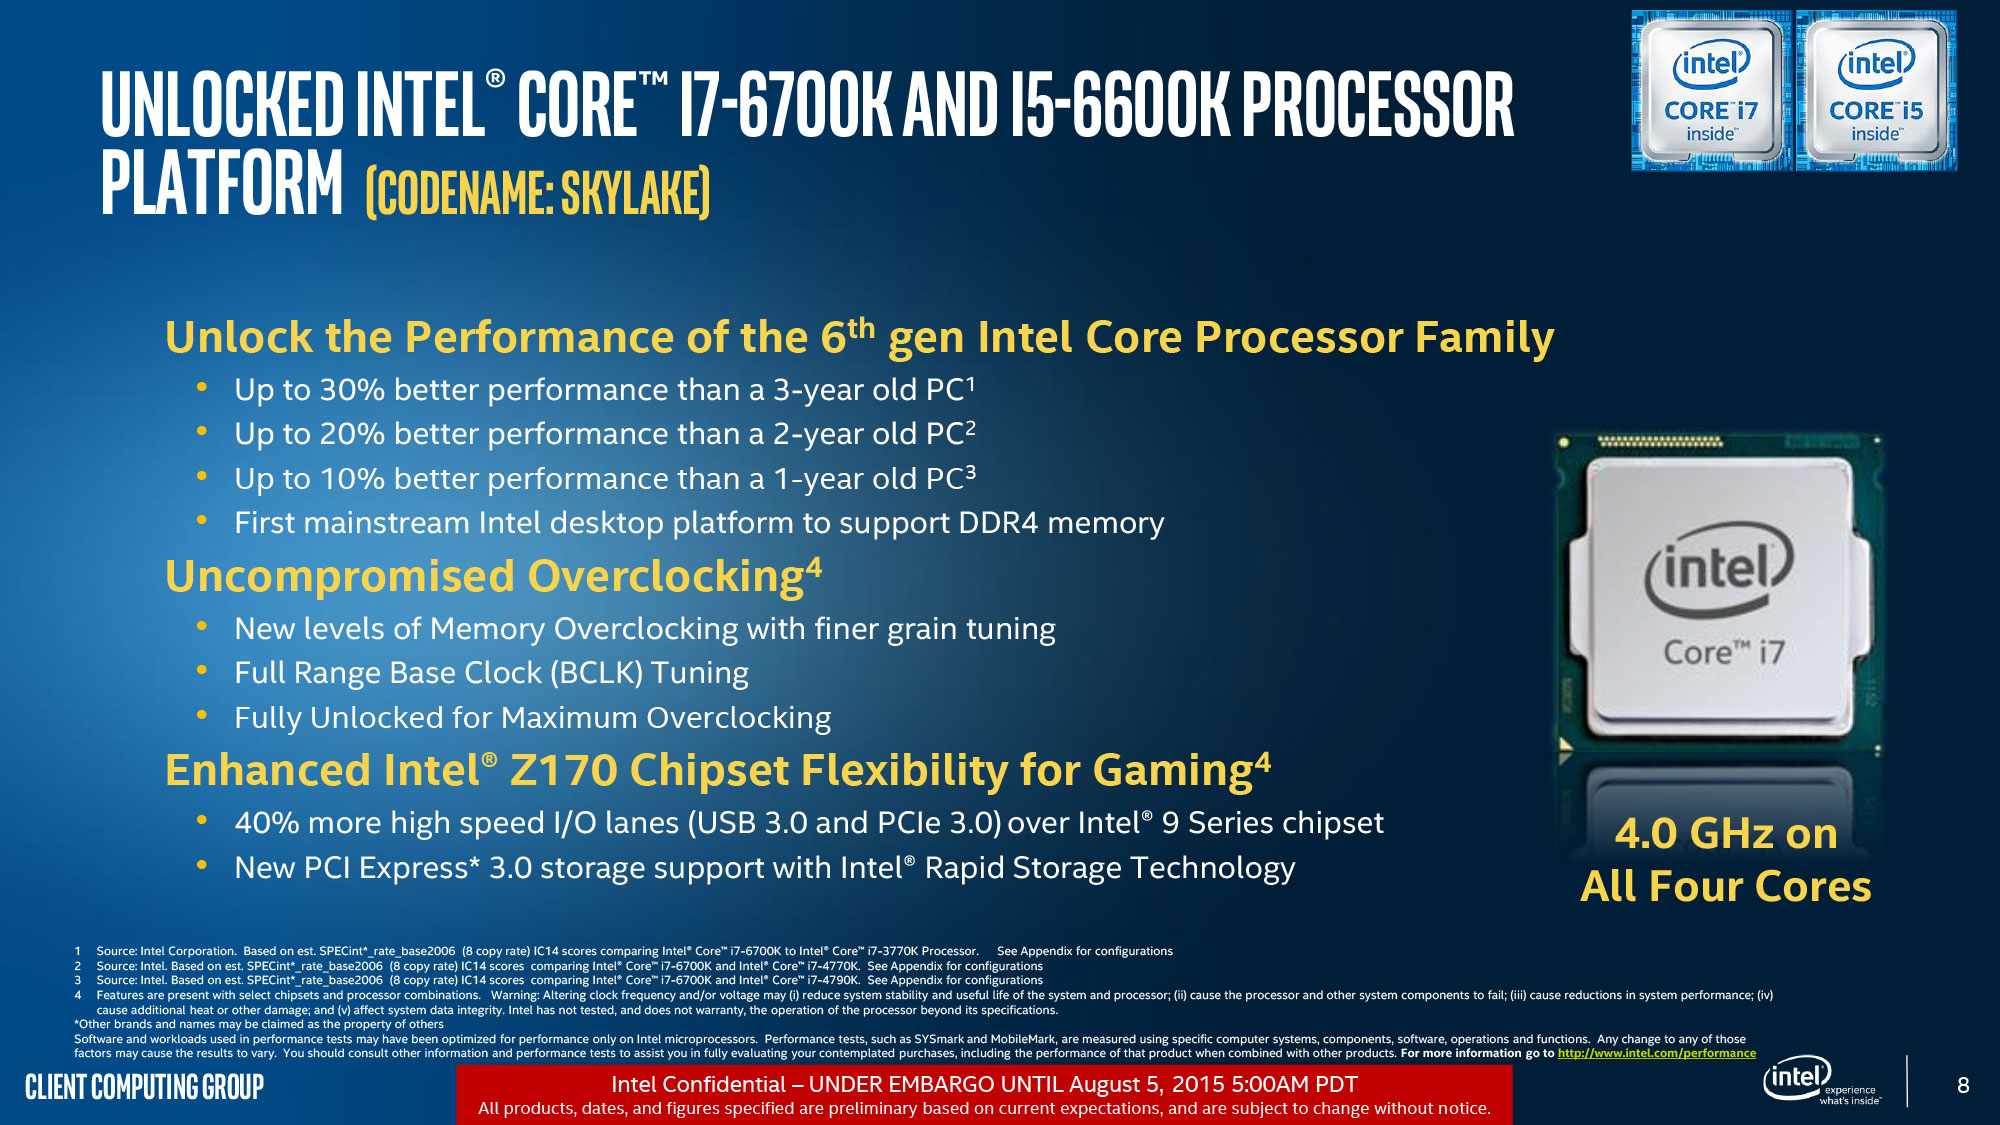 Intel-Skylake-gen-vs-gen-improvement.jpg